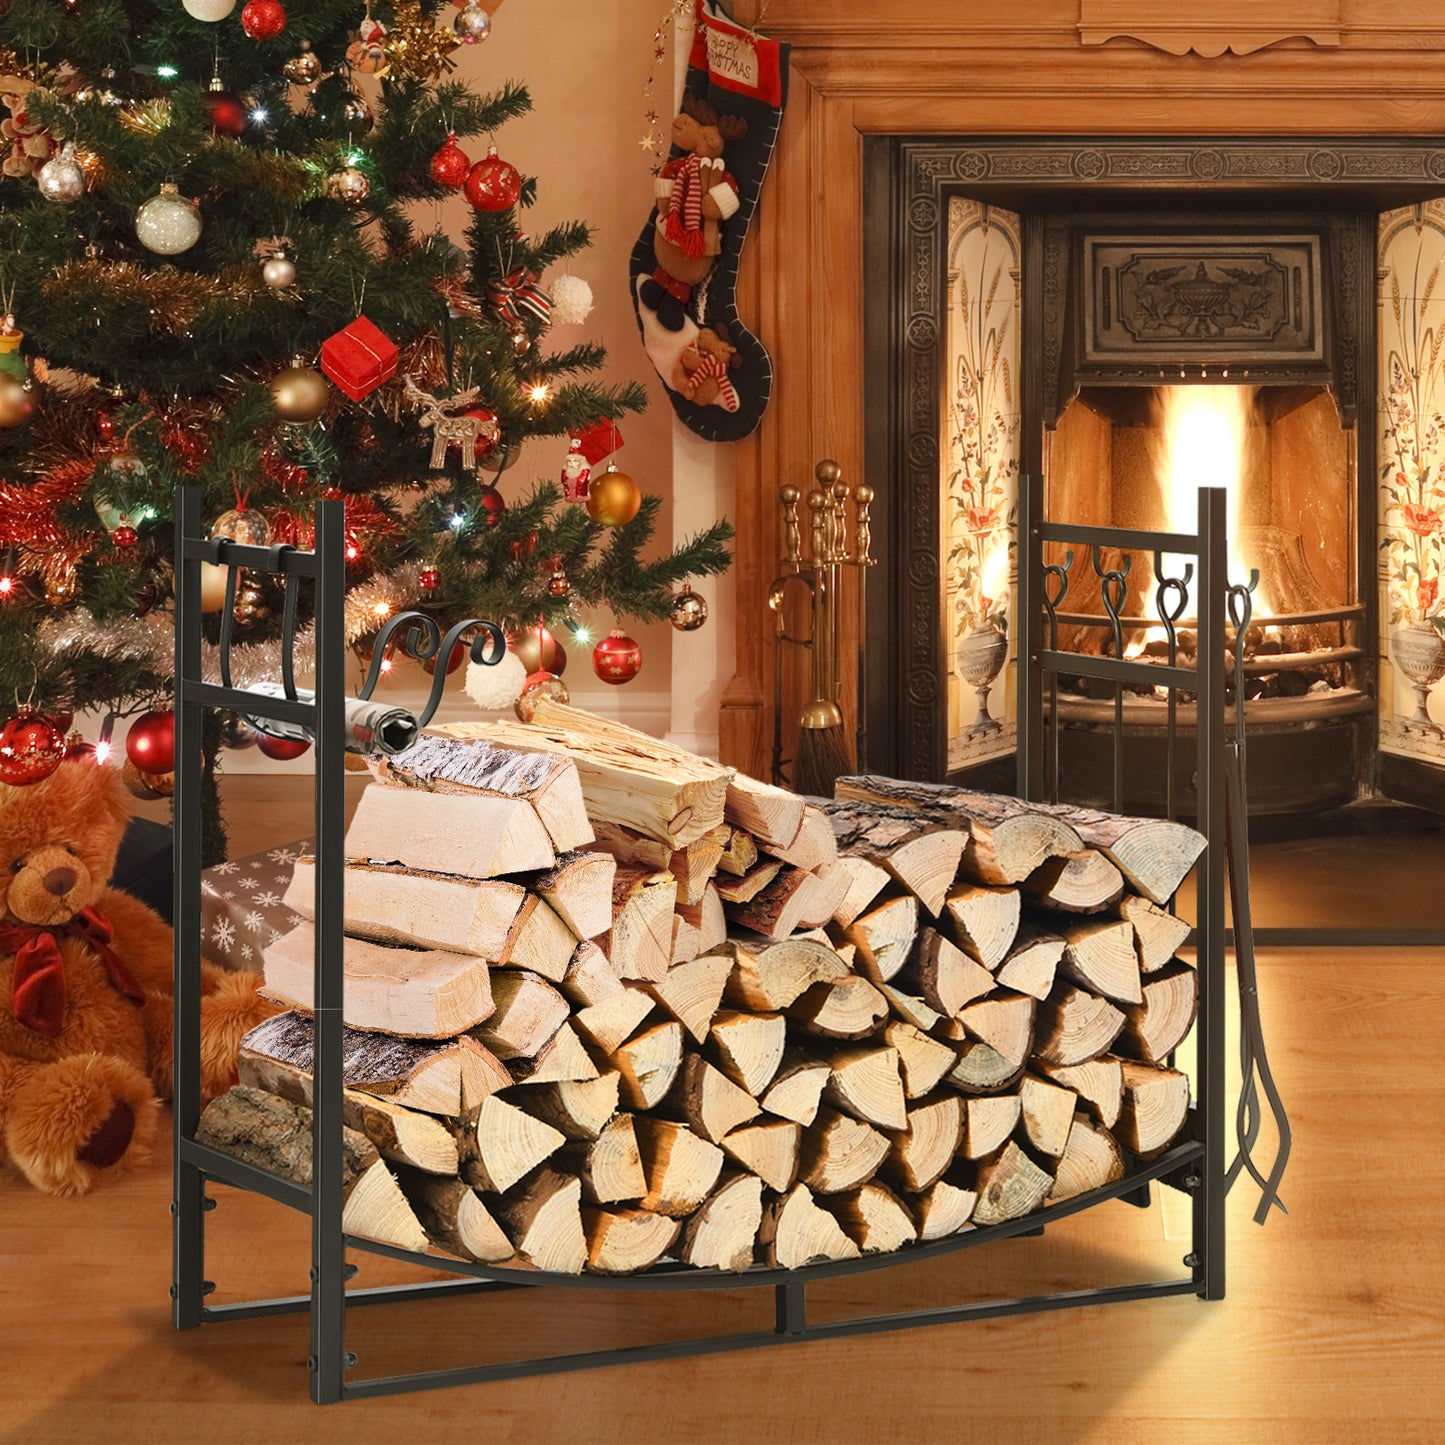 36 Inch Fireplace Log Holder with Kindling Holders and Shovel